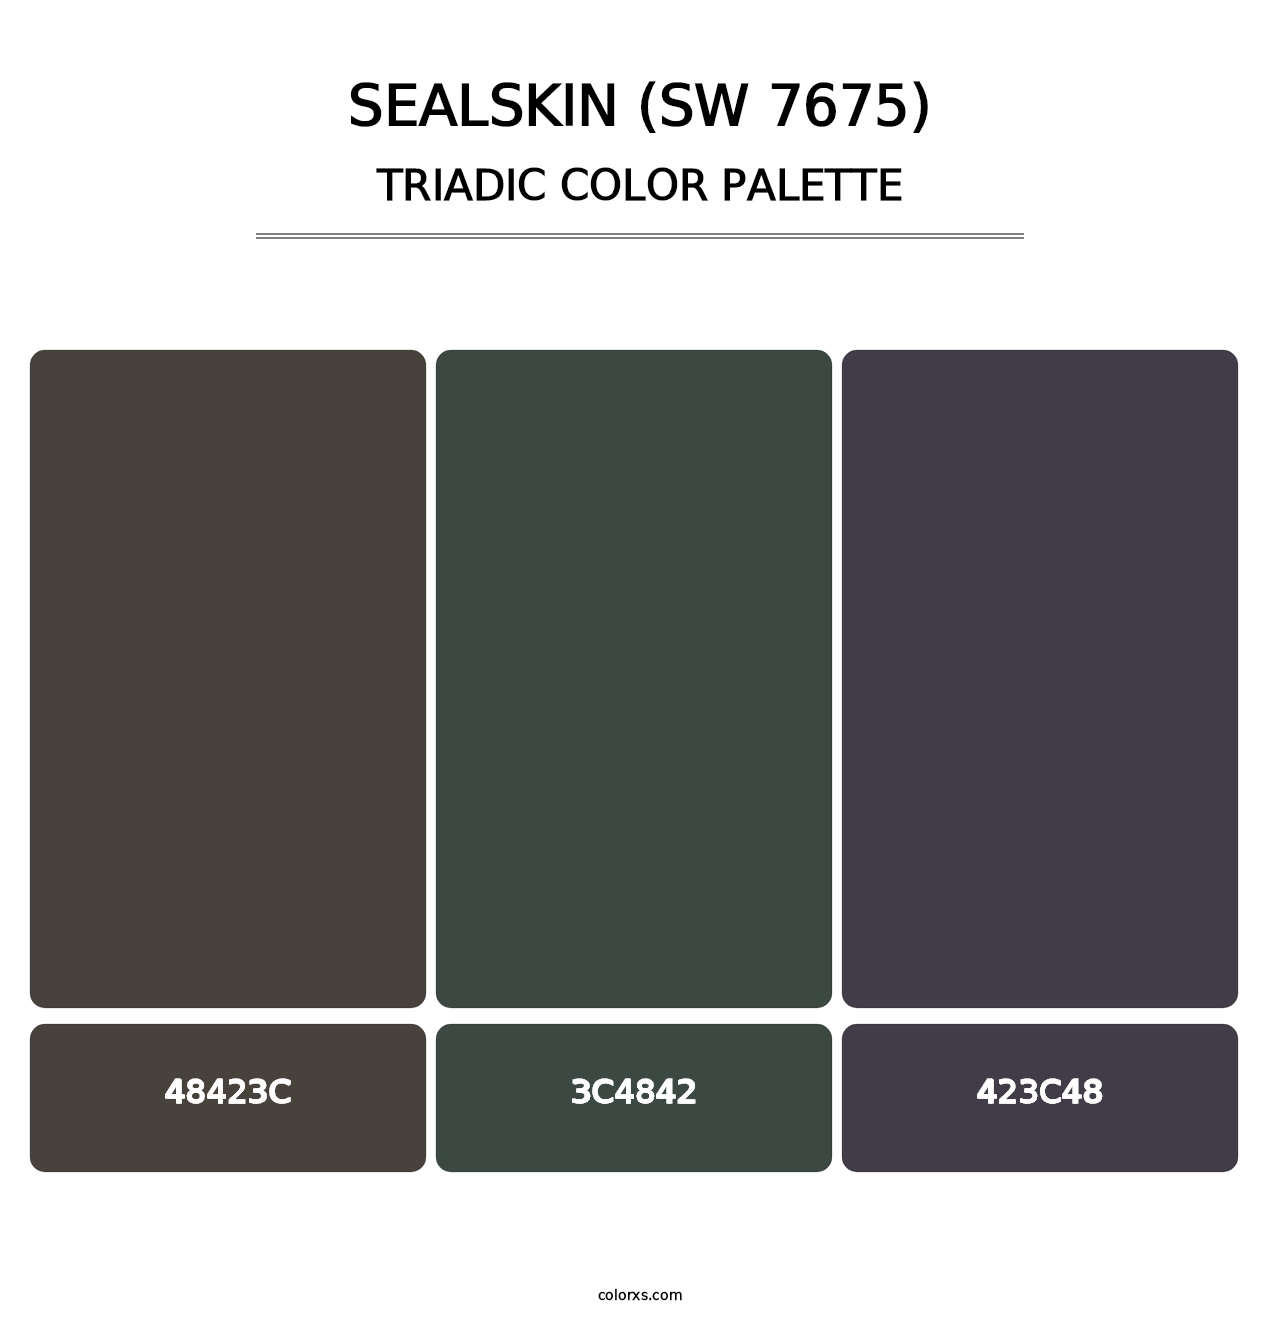 Sealskin (SW 7675) - Triadic Color Palette